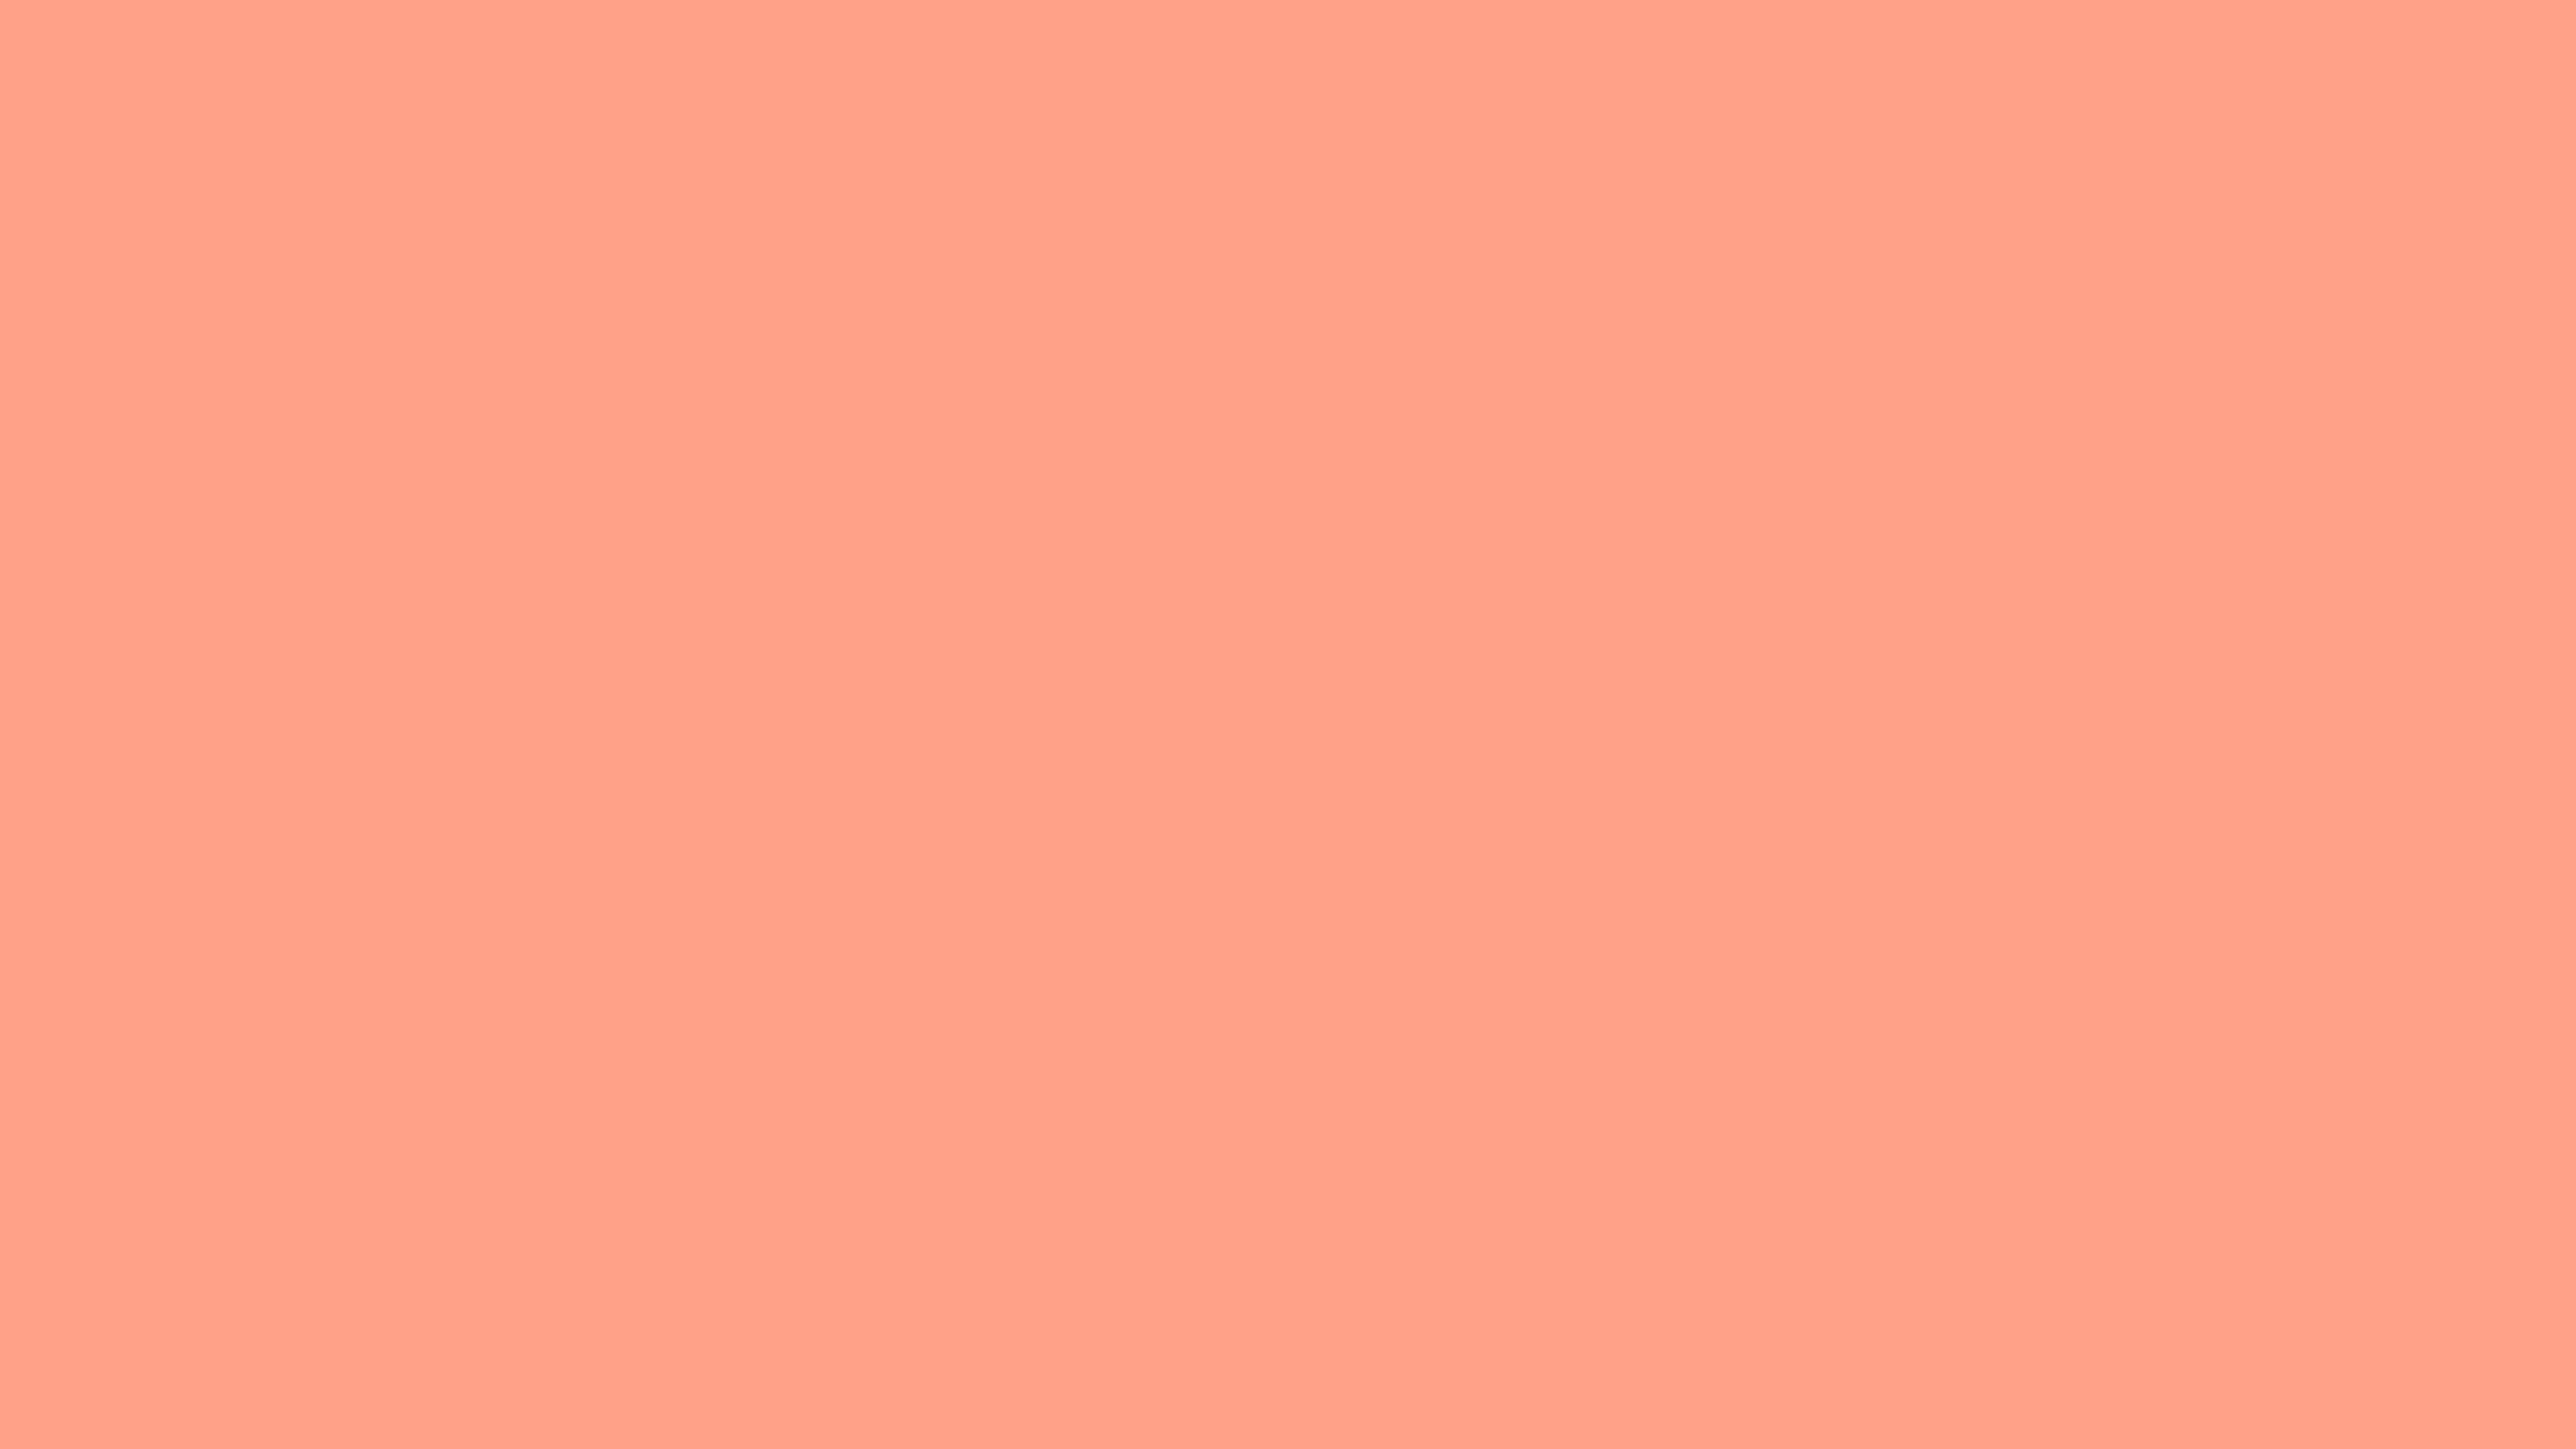 4096x2304 Vivid Tangerine Solid Color Background